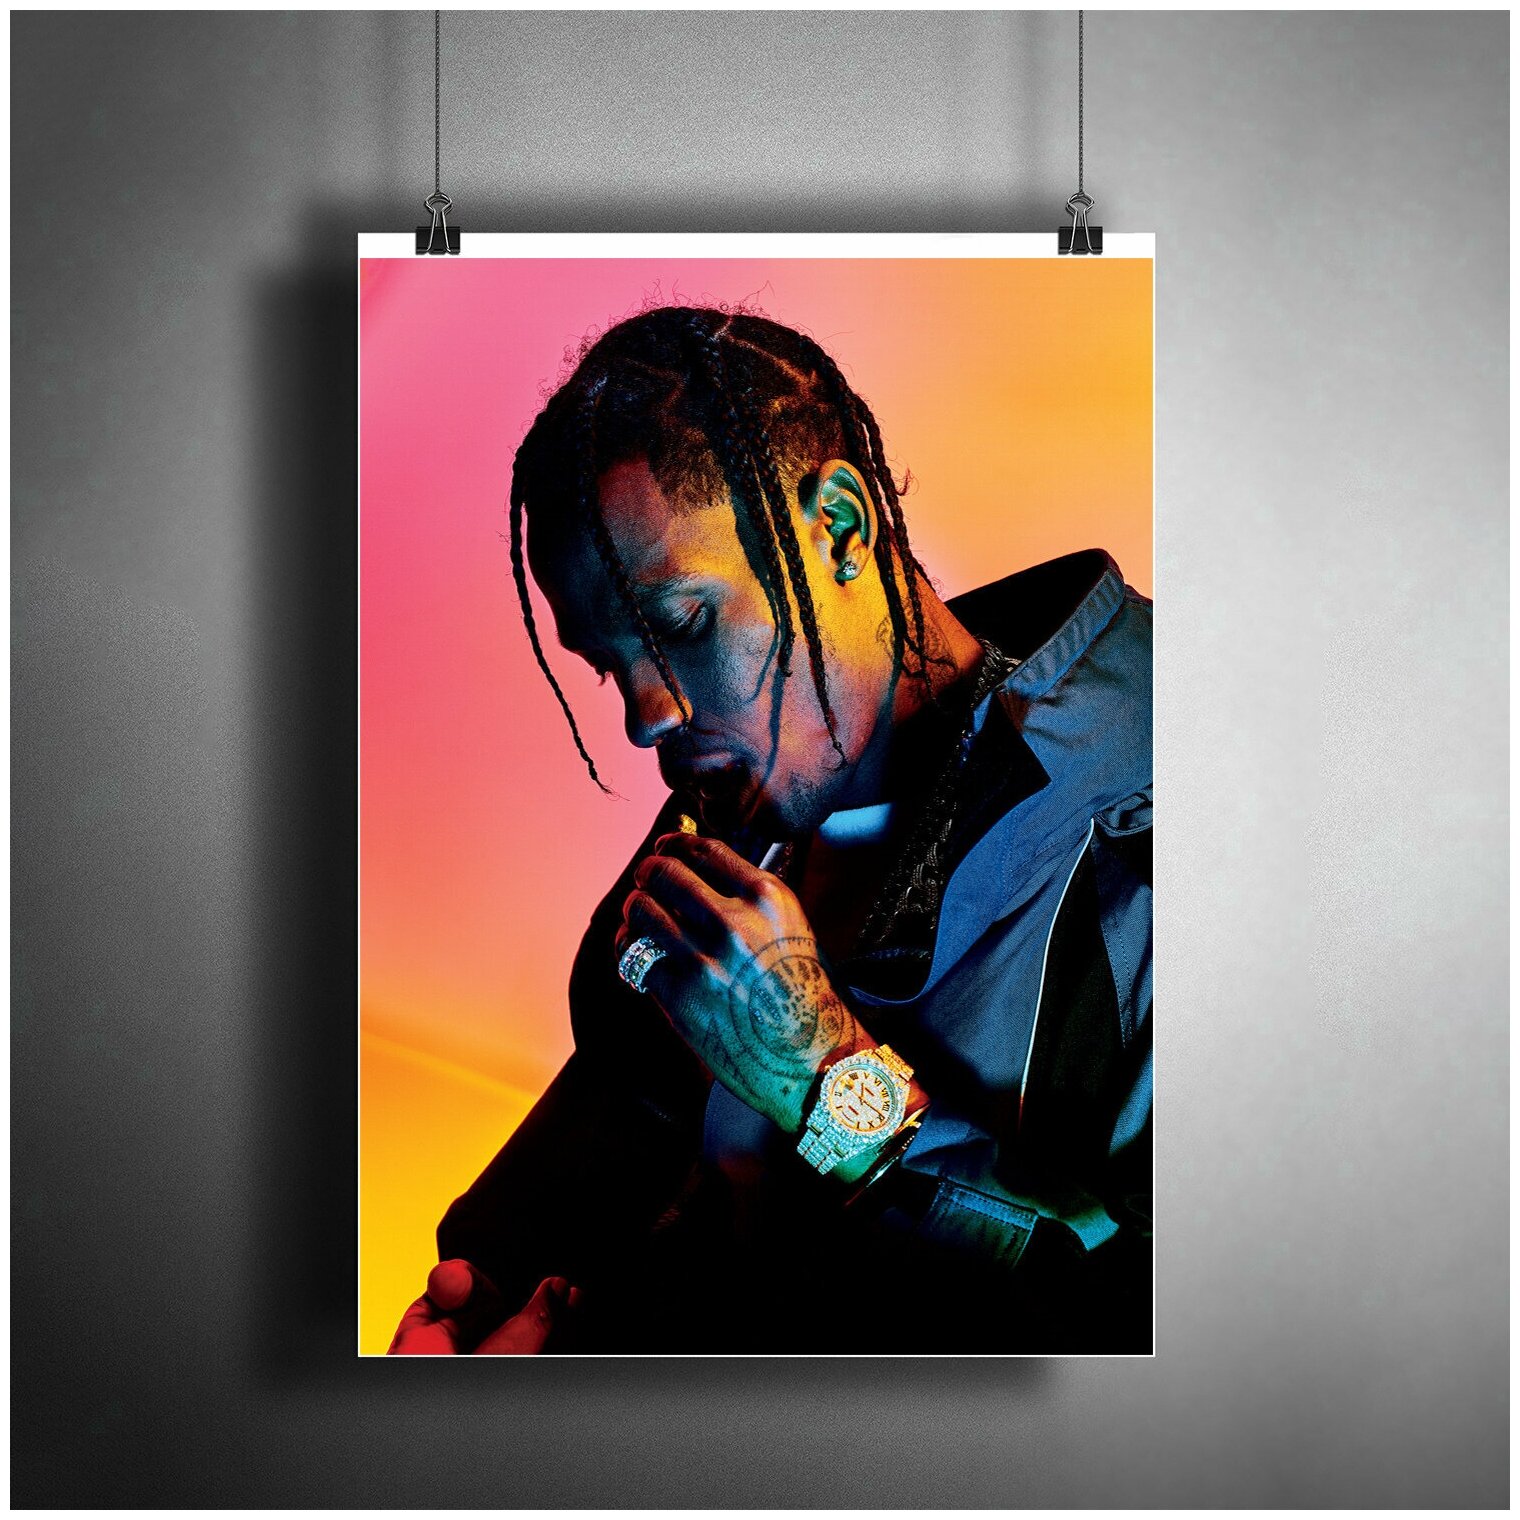 Постер плакат для интерьера "Музыка: Американский рэпер, певец Travis Scott (Трэвис Скотт)" / Декор дома, офиса, комнаты, квартиры A3 (297 x 420 мм)